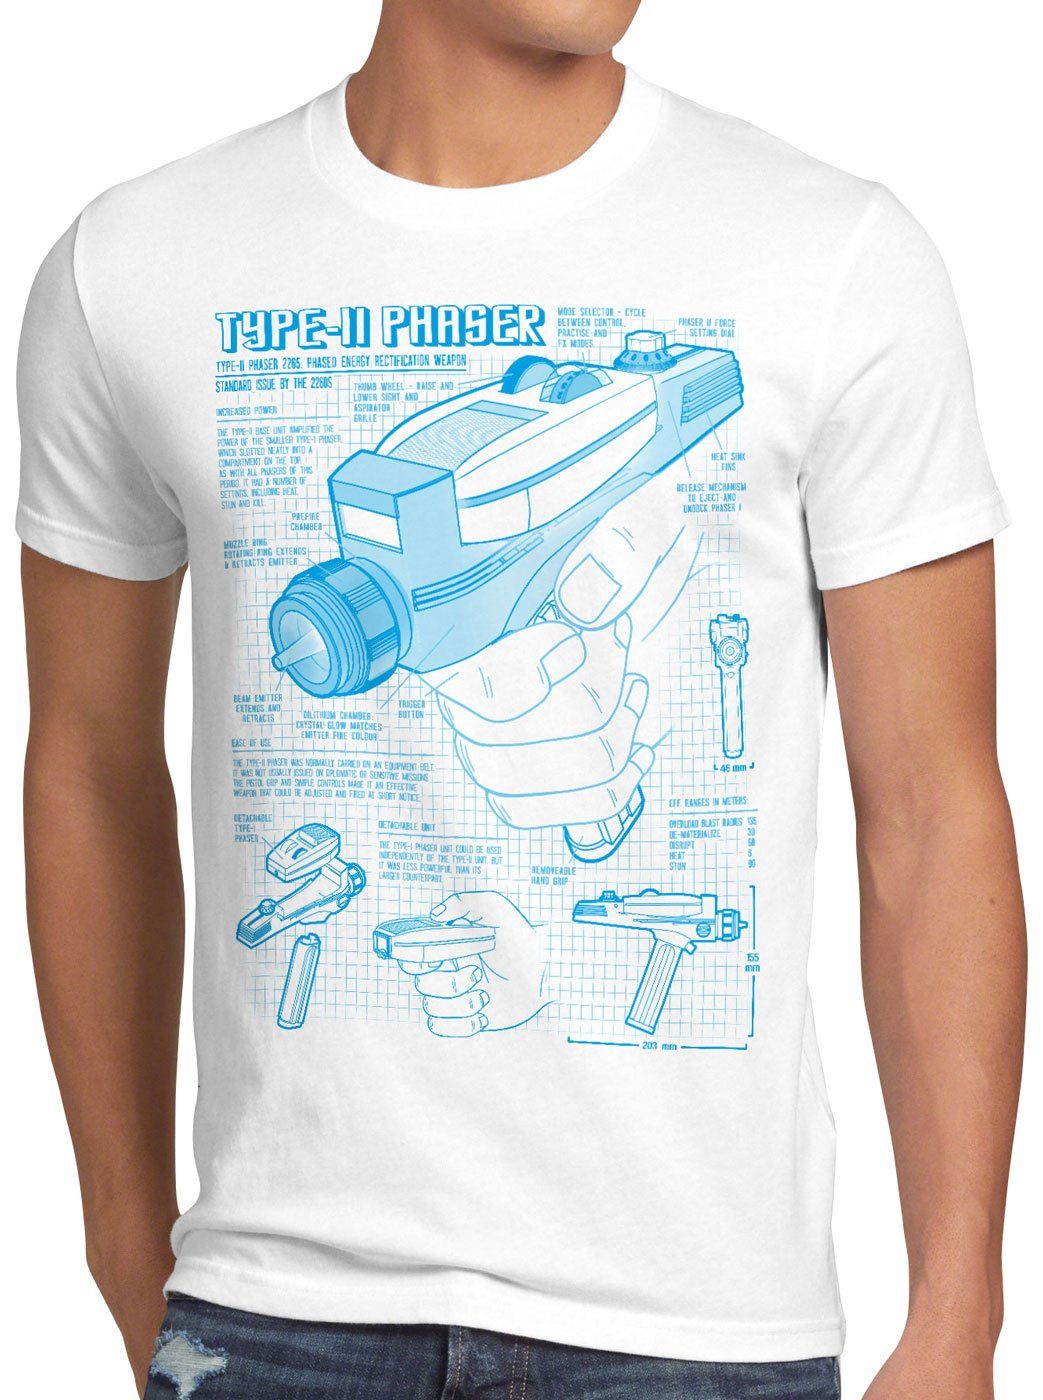 style3 Print-Shirt Herren T-Shirt Phaser 2265 Blaupause NCC-1701 trek trekkie star weiß